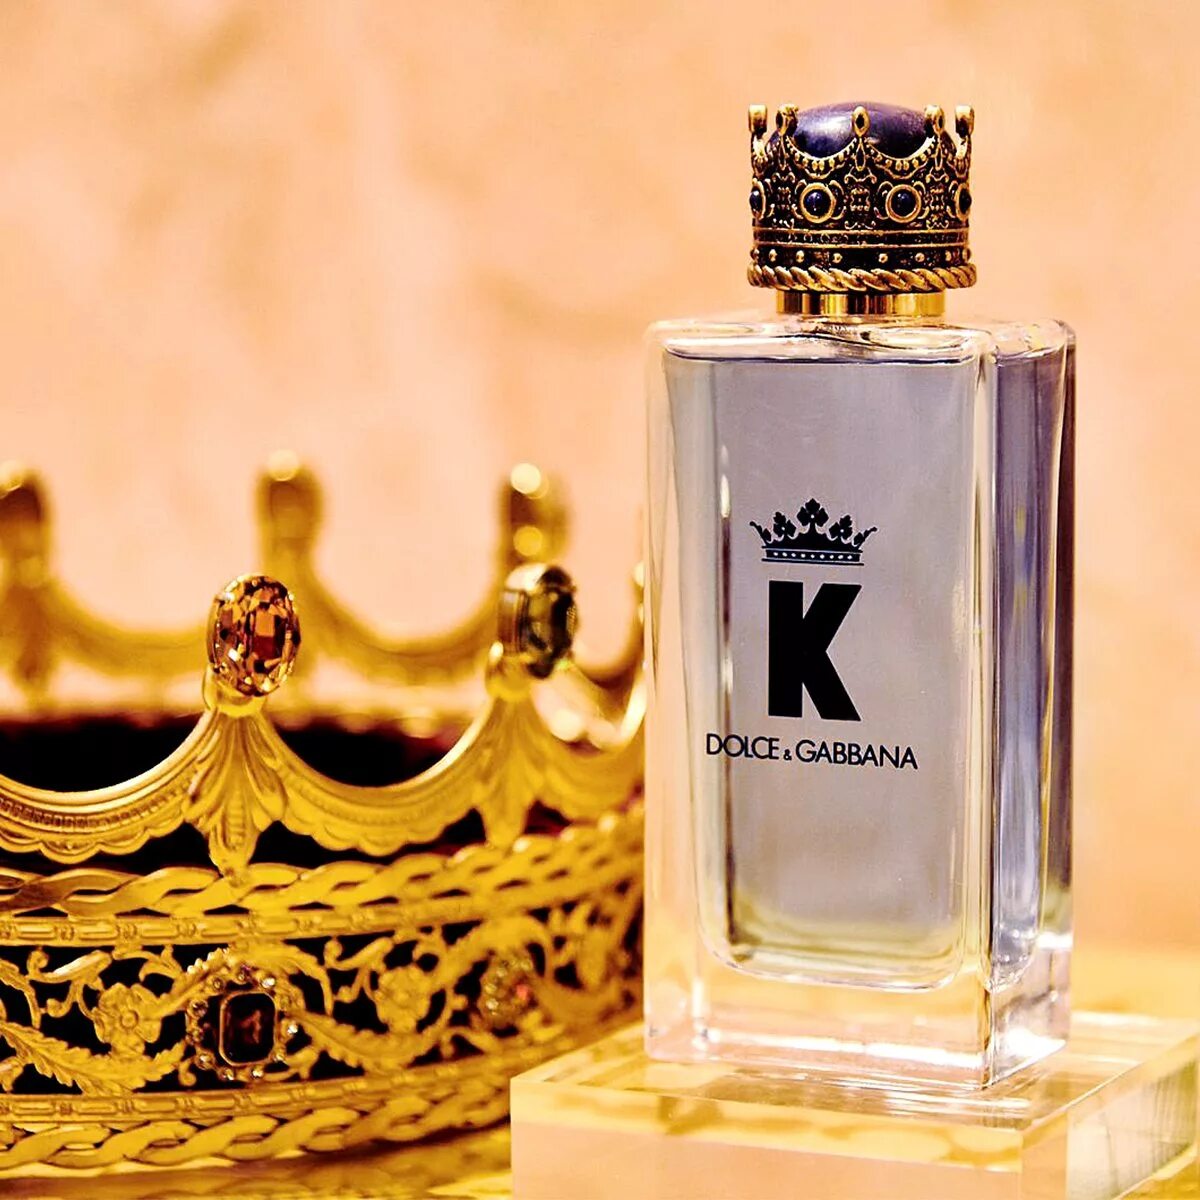 Дольче габбана корона цена. Dolce Gabbana King 100ml. Dolce Gabbana King Parfum. Dolce & Gabbana King Eau de Parfum 100 ml. Dolce Gabbana k King 100ml EDT.